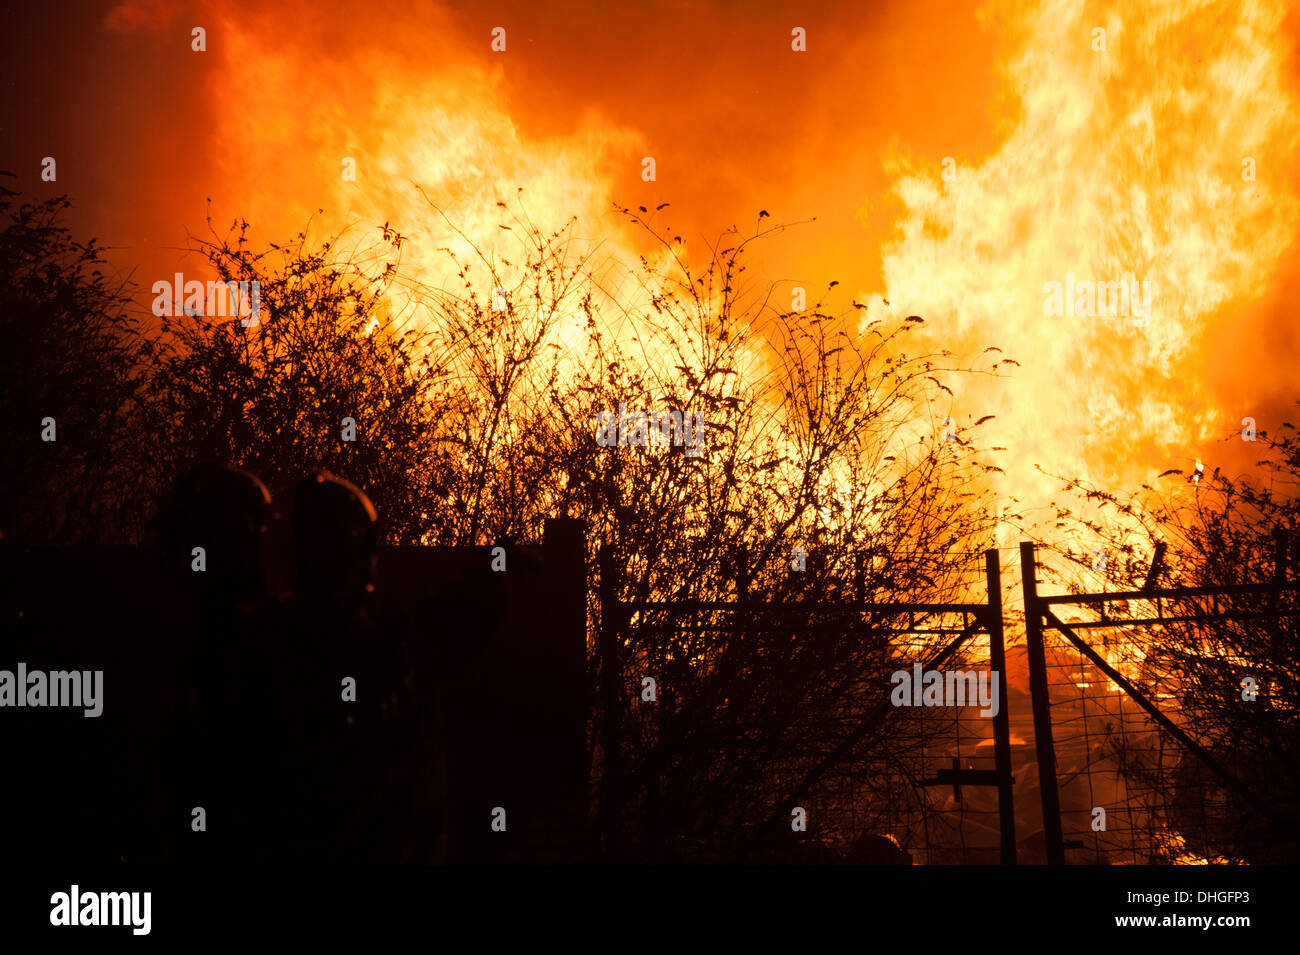 Fire Huge Blaze Flames Night Orange Yellow Fierce Hot Stock Photo